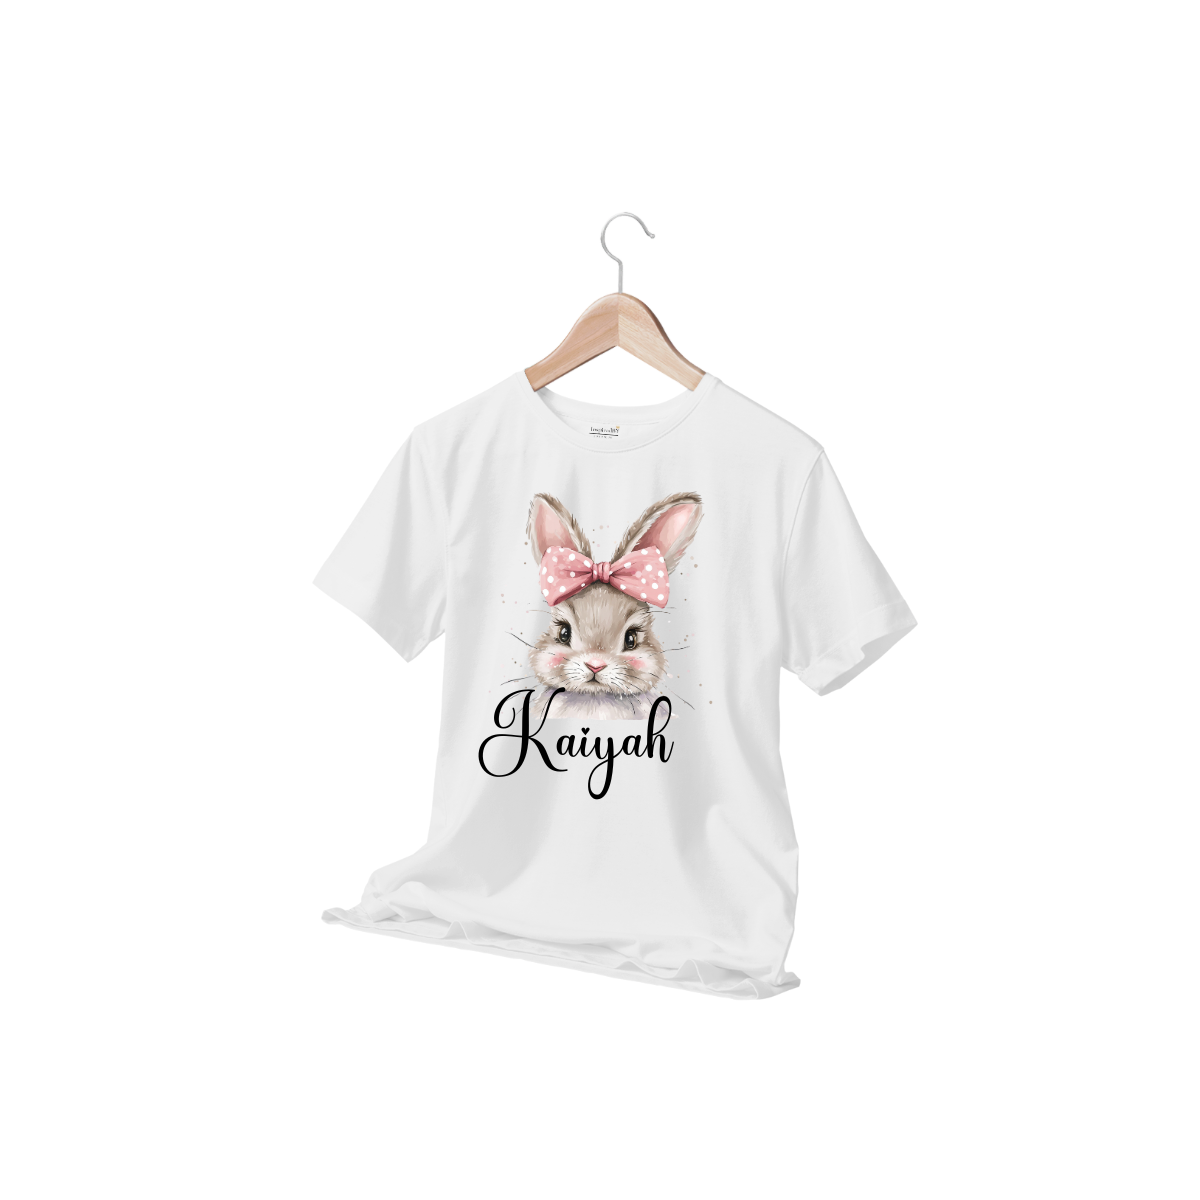 "Personalized Kids Bunny T-Shirt - Custom Name Soft Cotton Tee, Girls' Cute Rabbit Shirt with Polka Dot Bow, Customizable Children’s Fashion Top"